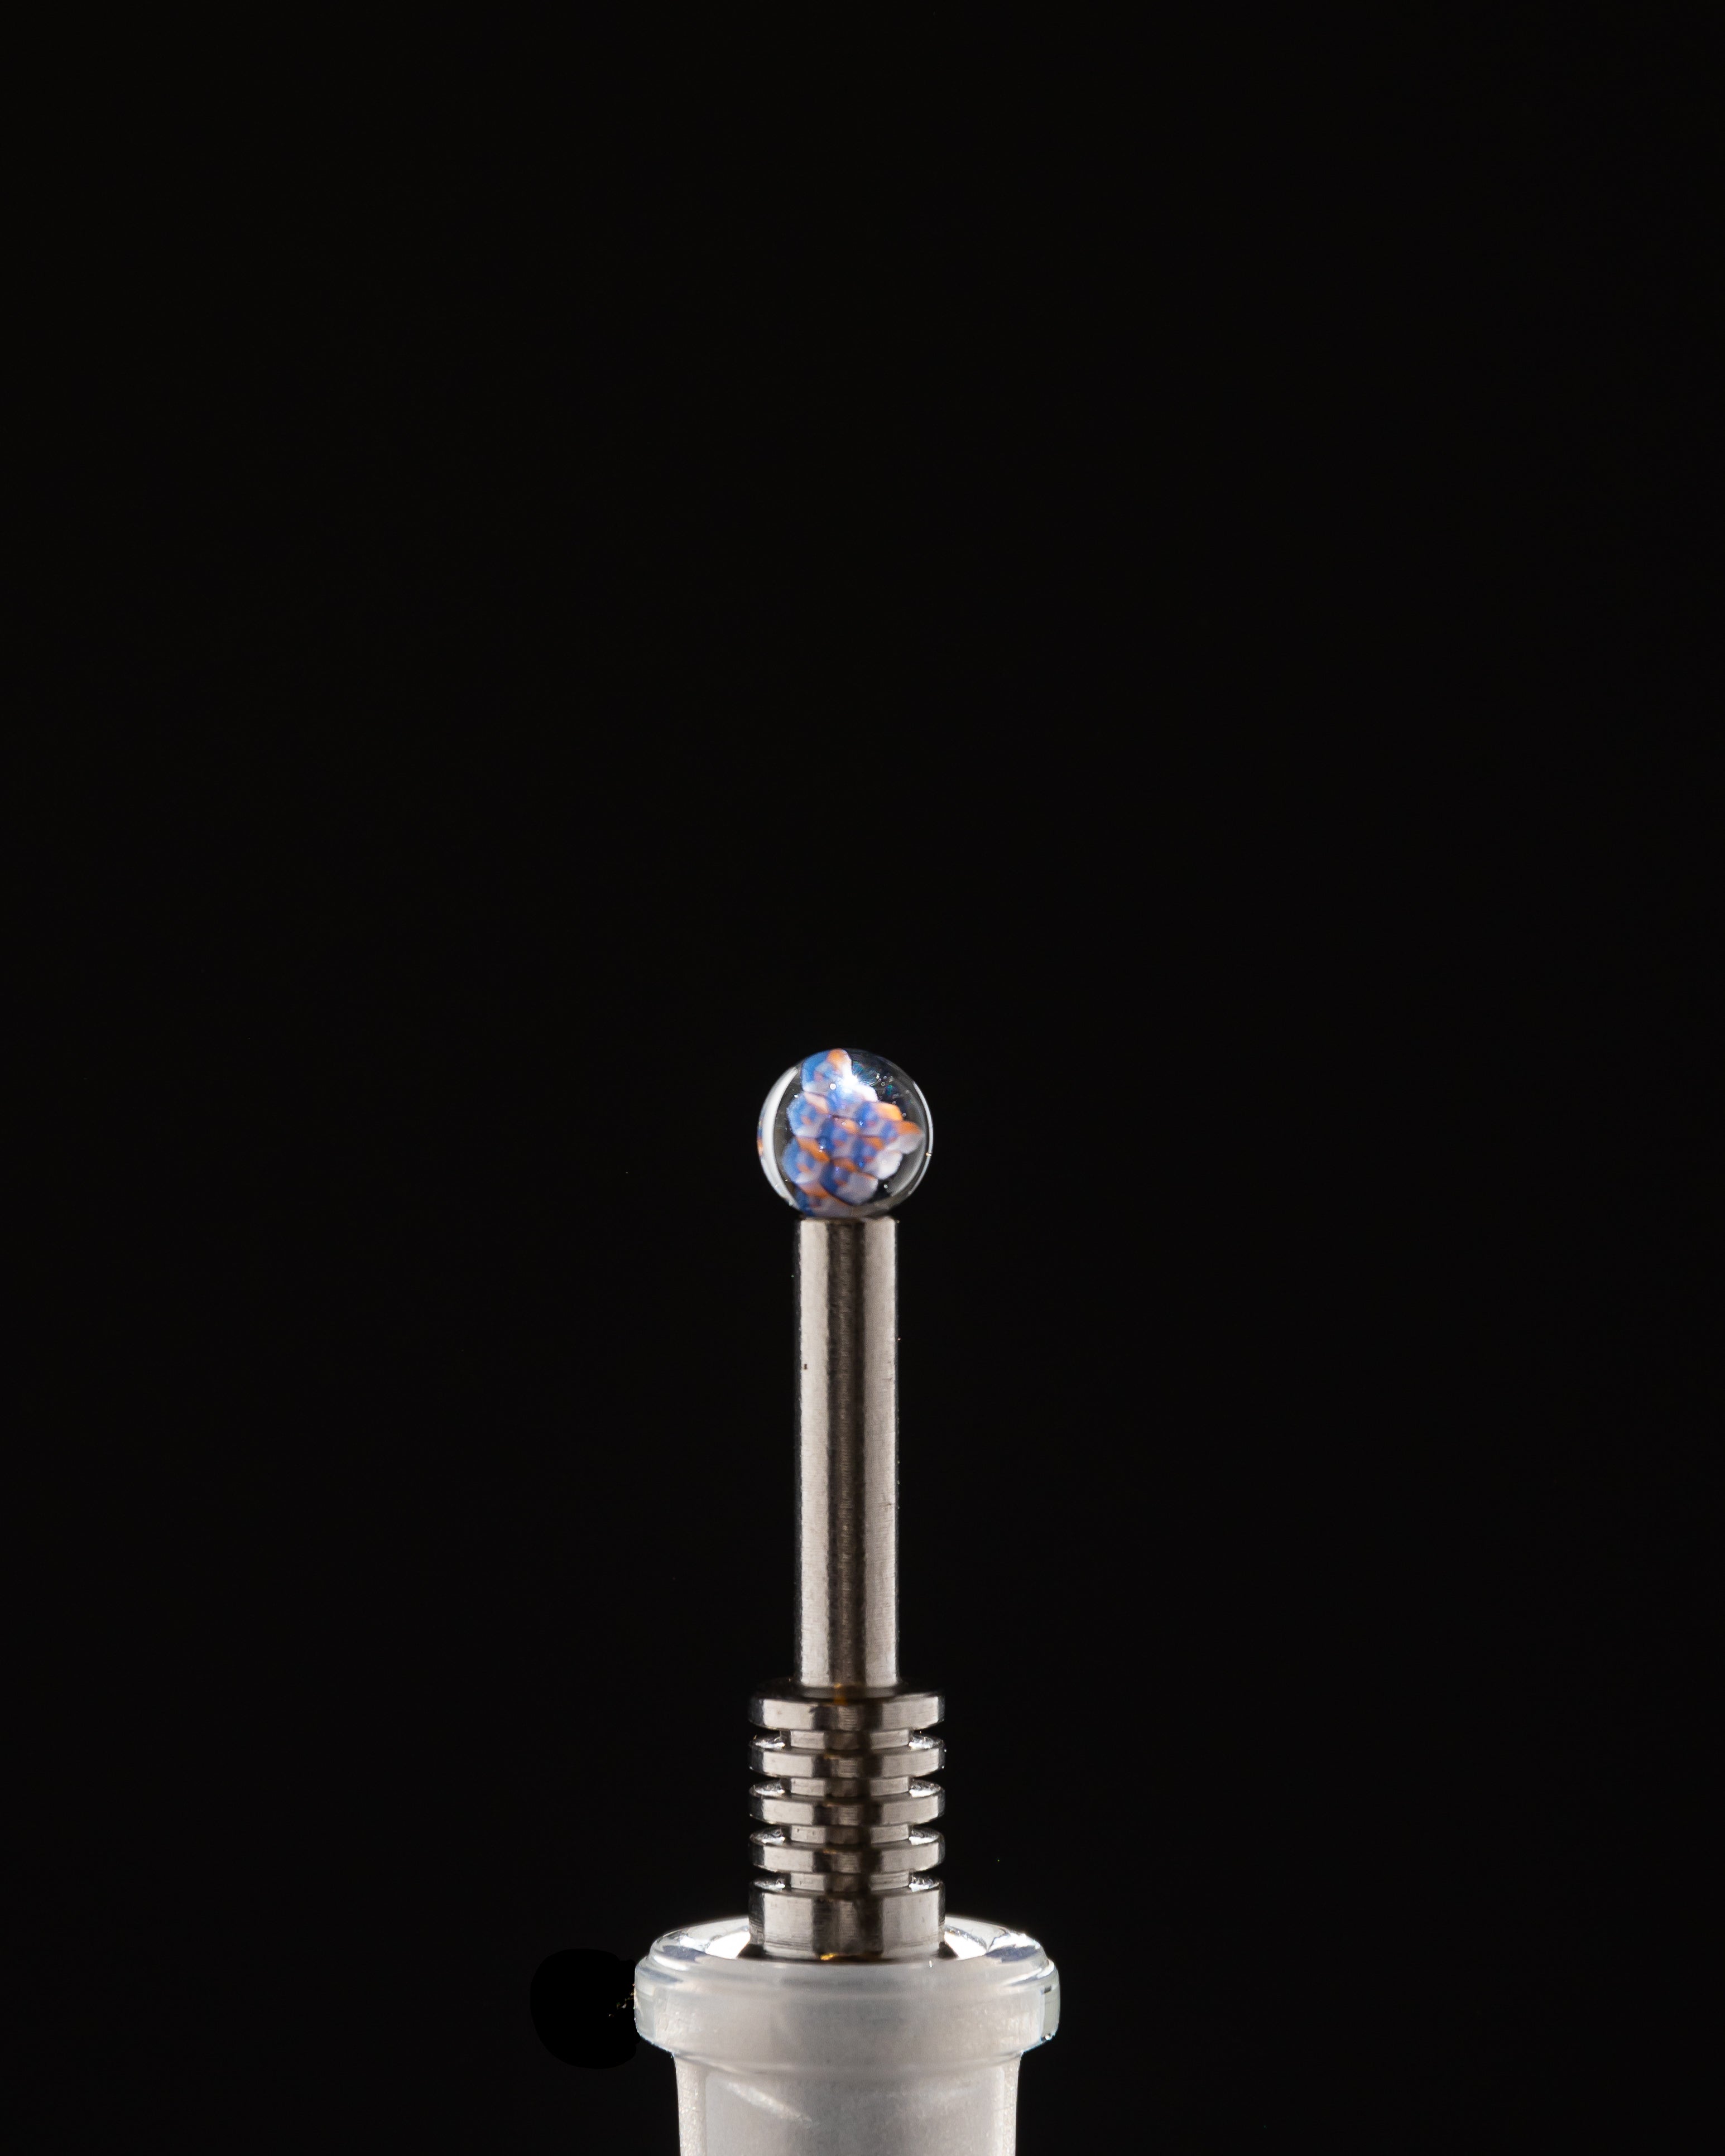 Steve Hulsebos Glass - Milli Terp Pearl 6mm (Millie Triangle)